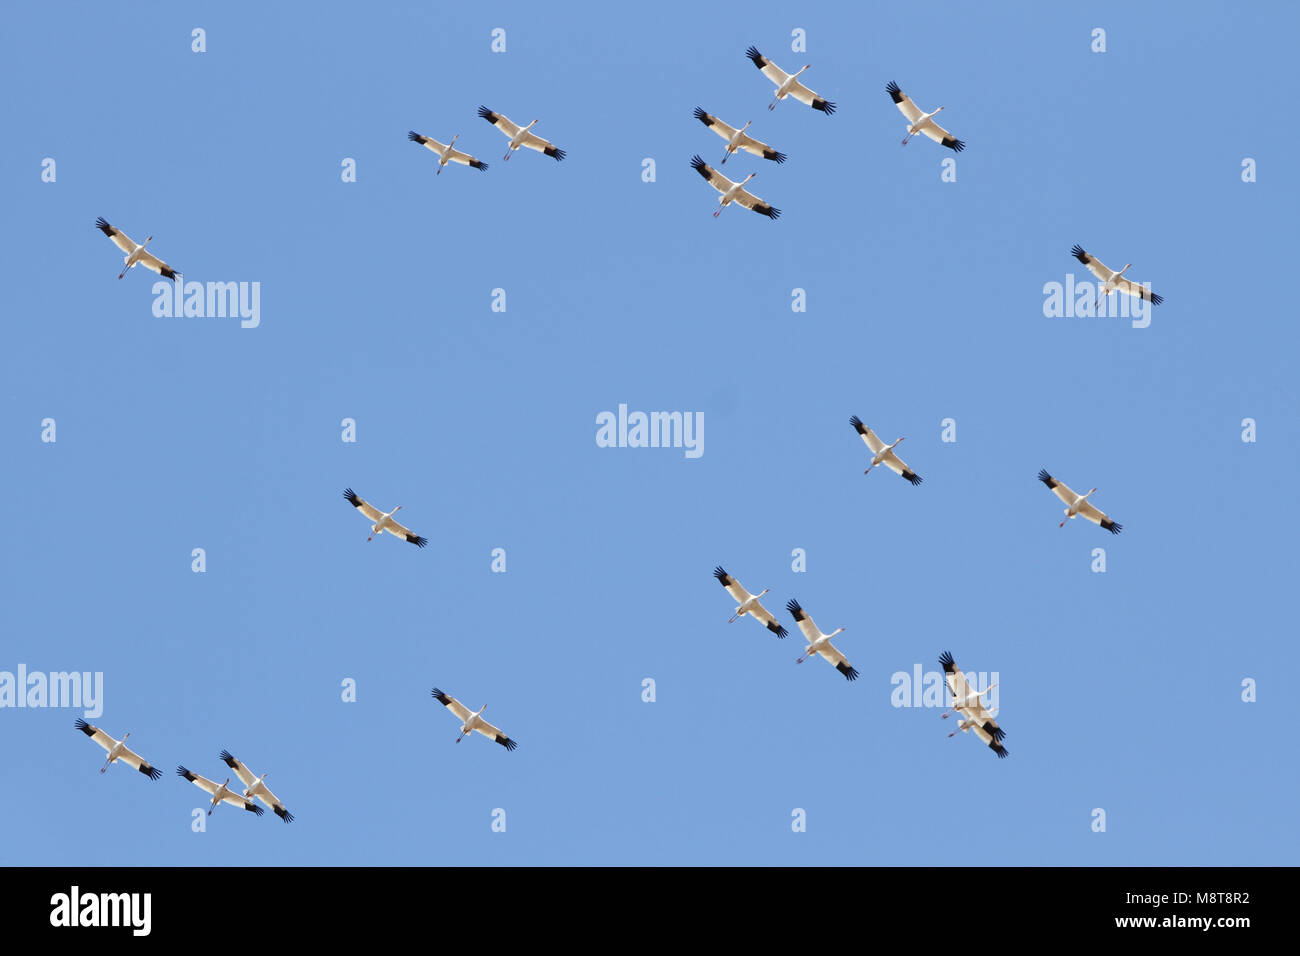 Ernstig bedreigde Siberische Kraanvogels Witte en chinois overwinteringsgebied ; critique d'extinction sur la grue de Sibérie (Leucogeranus leucogeranus) dans C Banque D'Images